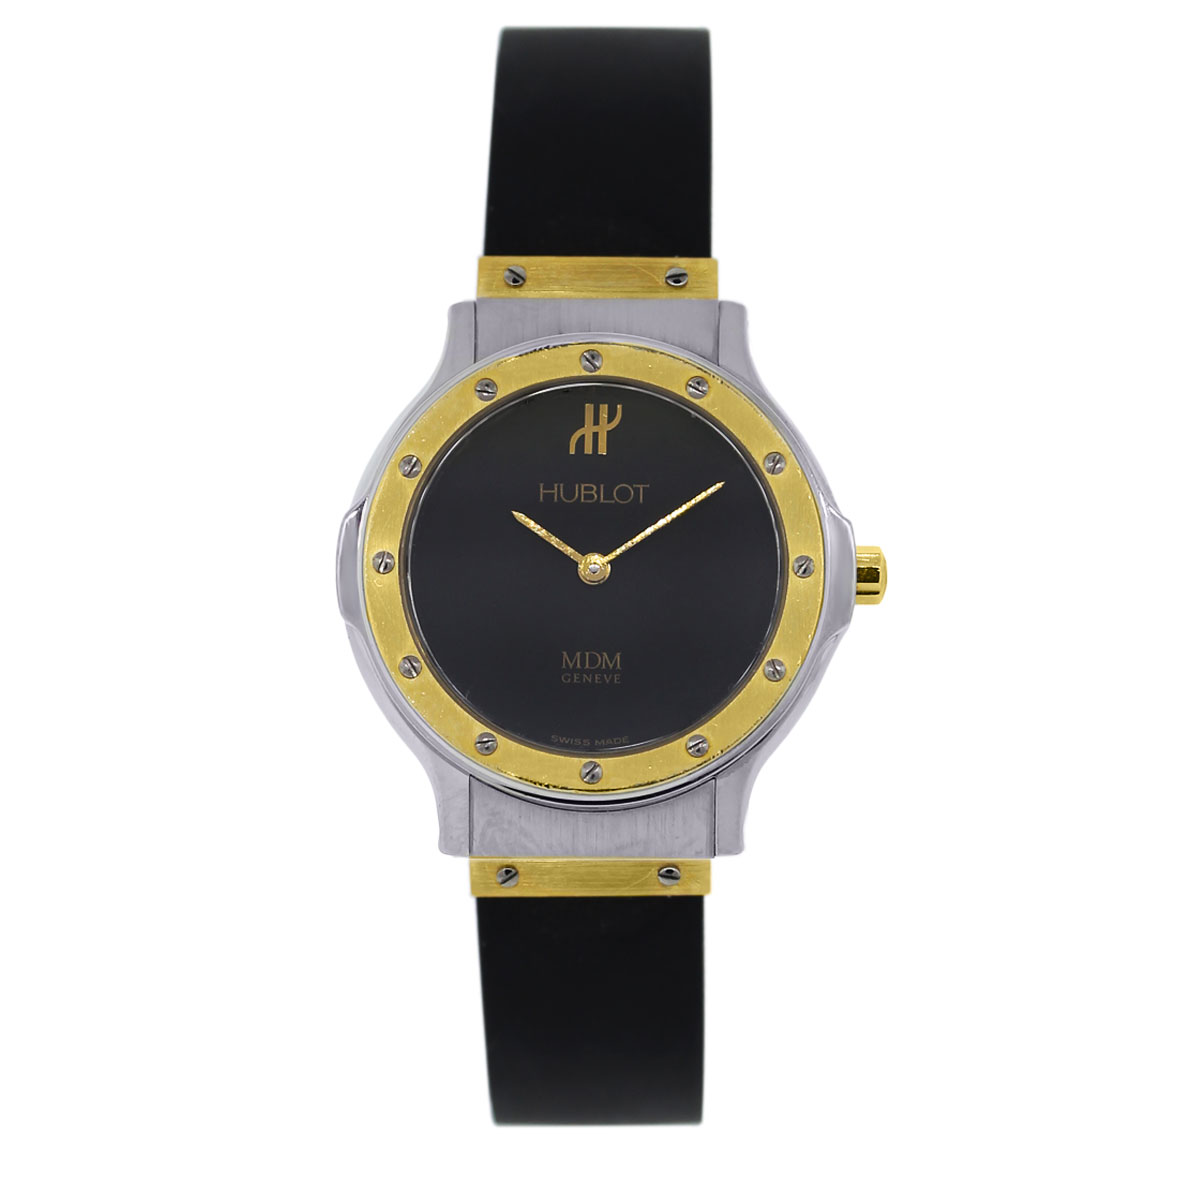 Hublot Women's Vintage Hublot Classic MDM Emerald Watch, 31mm - Black  ($2,299) ❤ liked on Polyvore featuring jewelr… | Vintage watches, Hublot  classic, Watch design